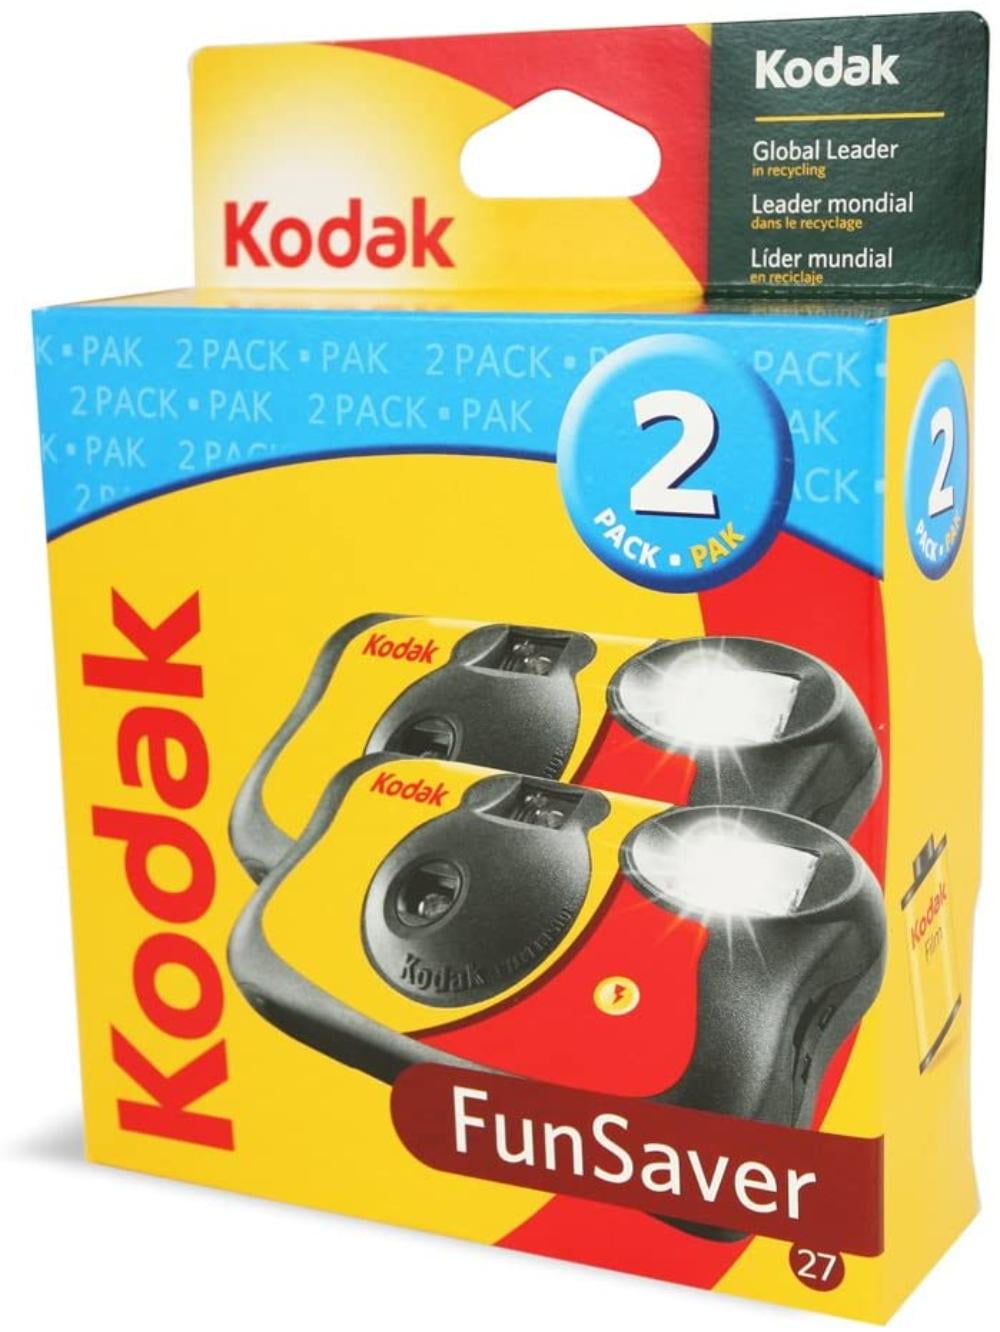 Kodak FunSaver 35mm Single Use Film Camera for sale online